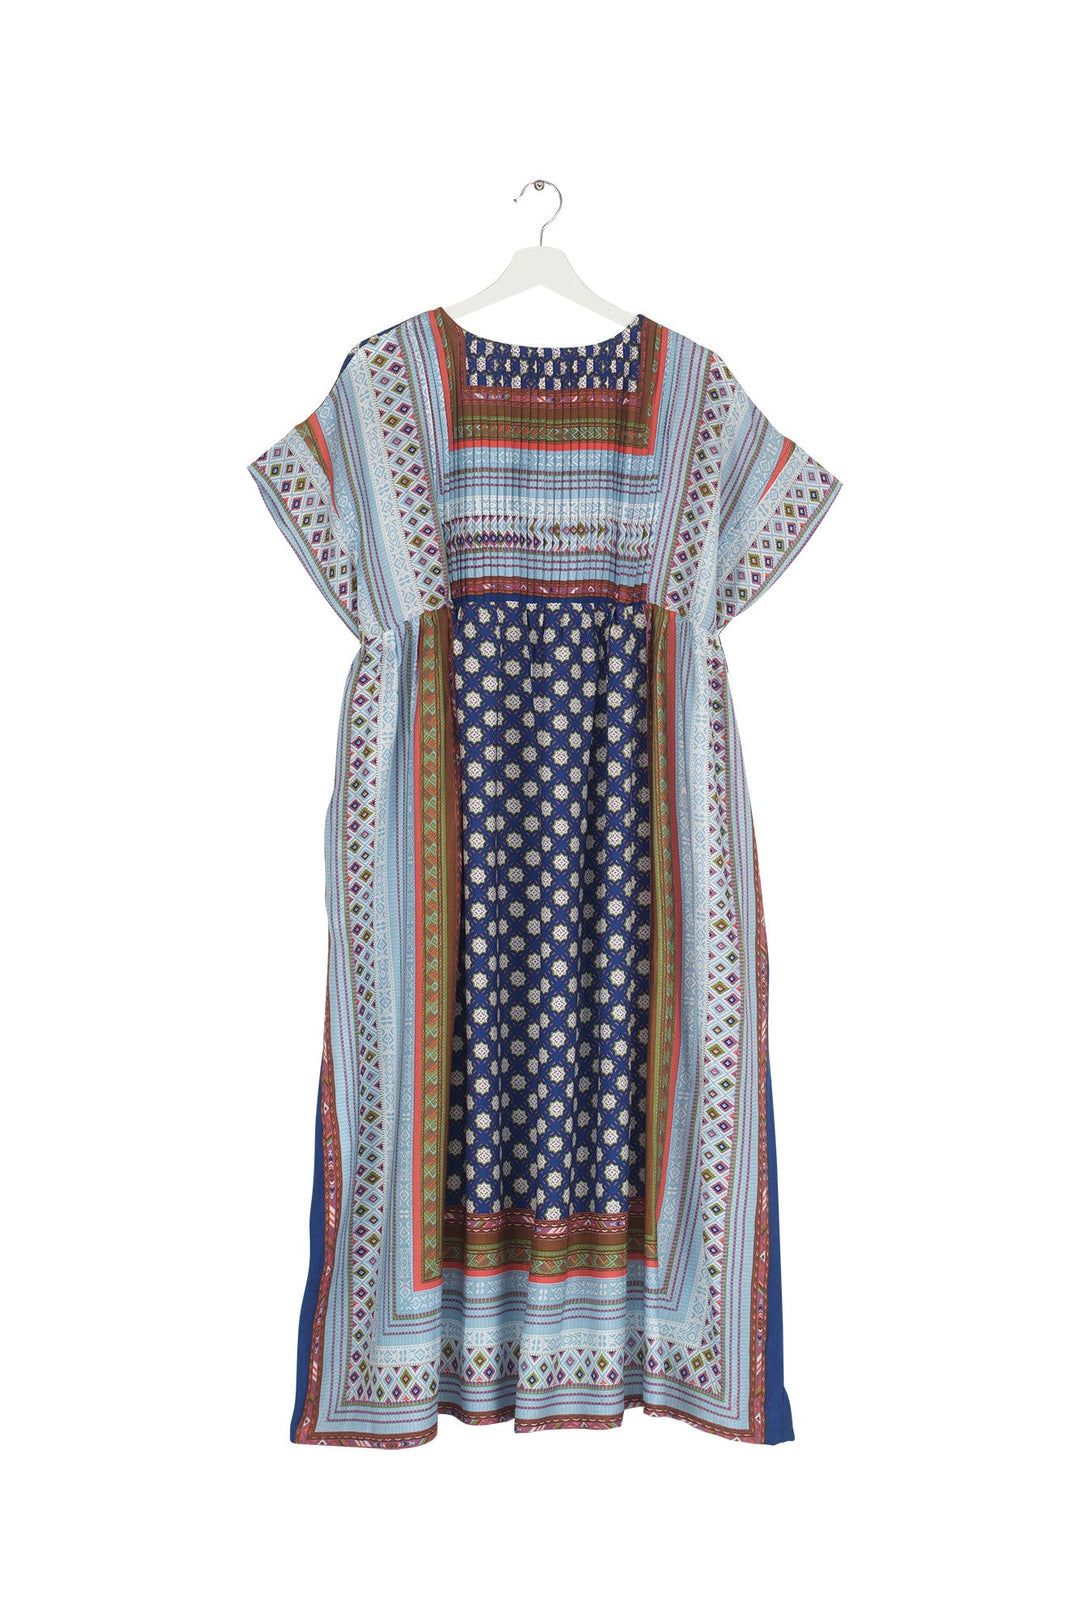 Women's short sleeve pleated dress in indigo with moorish print by One Hundred Stars